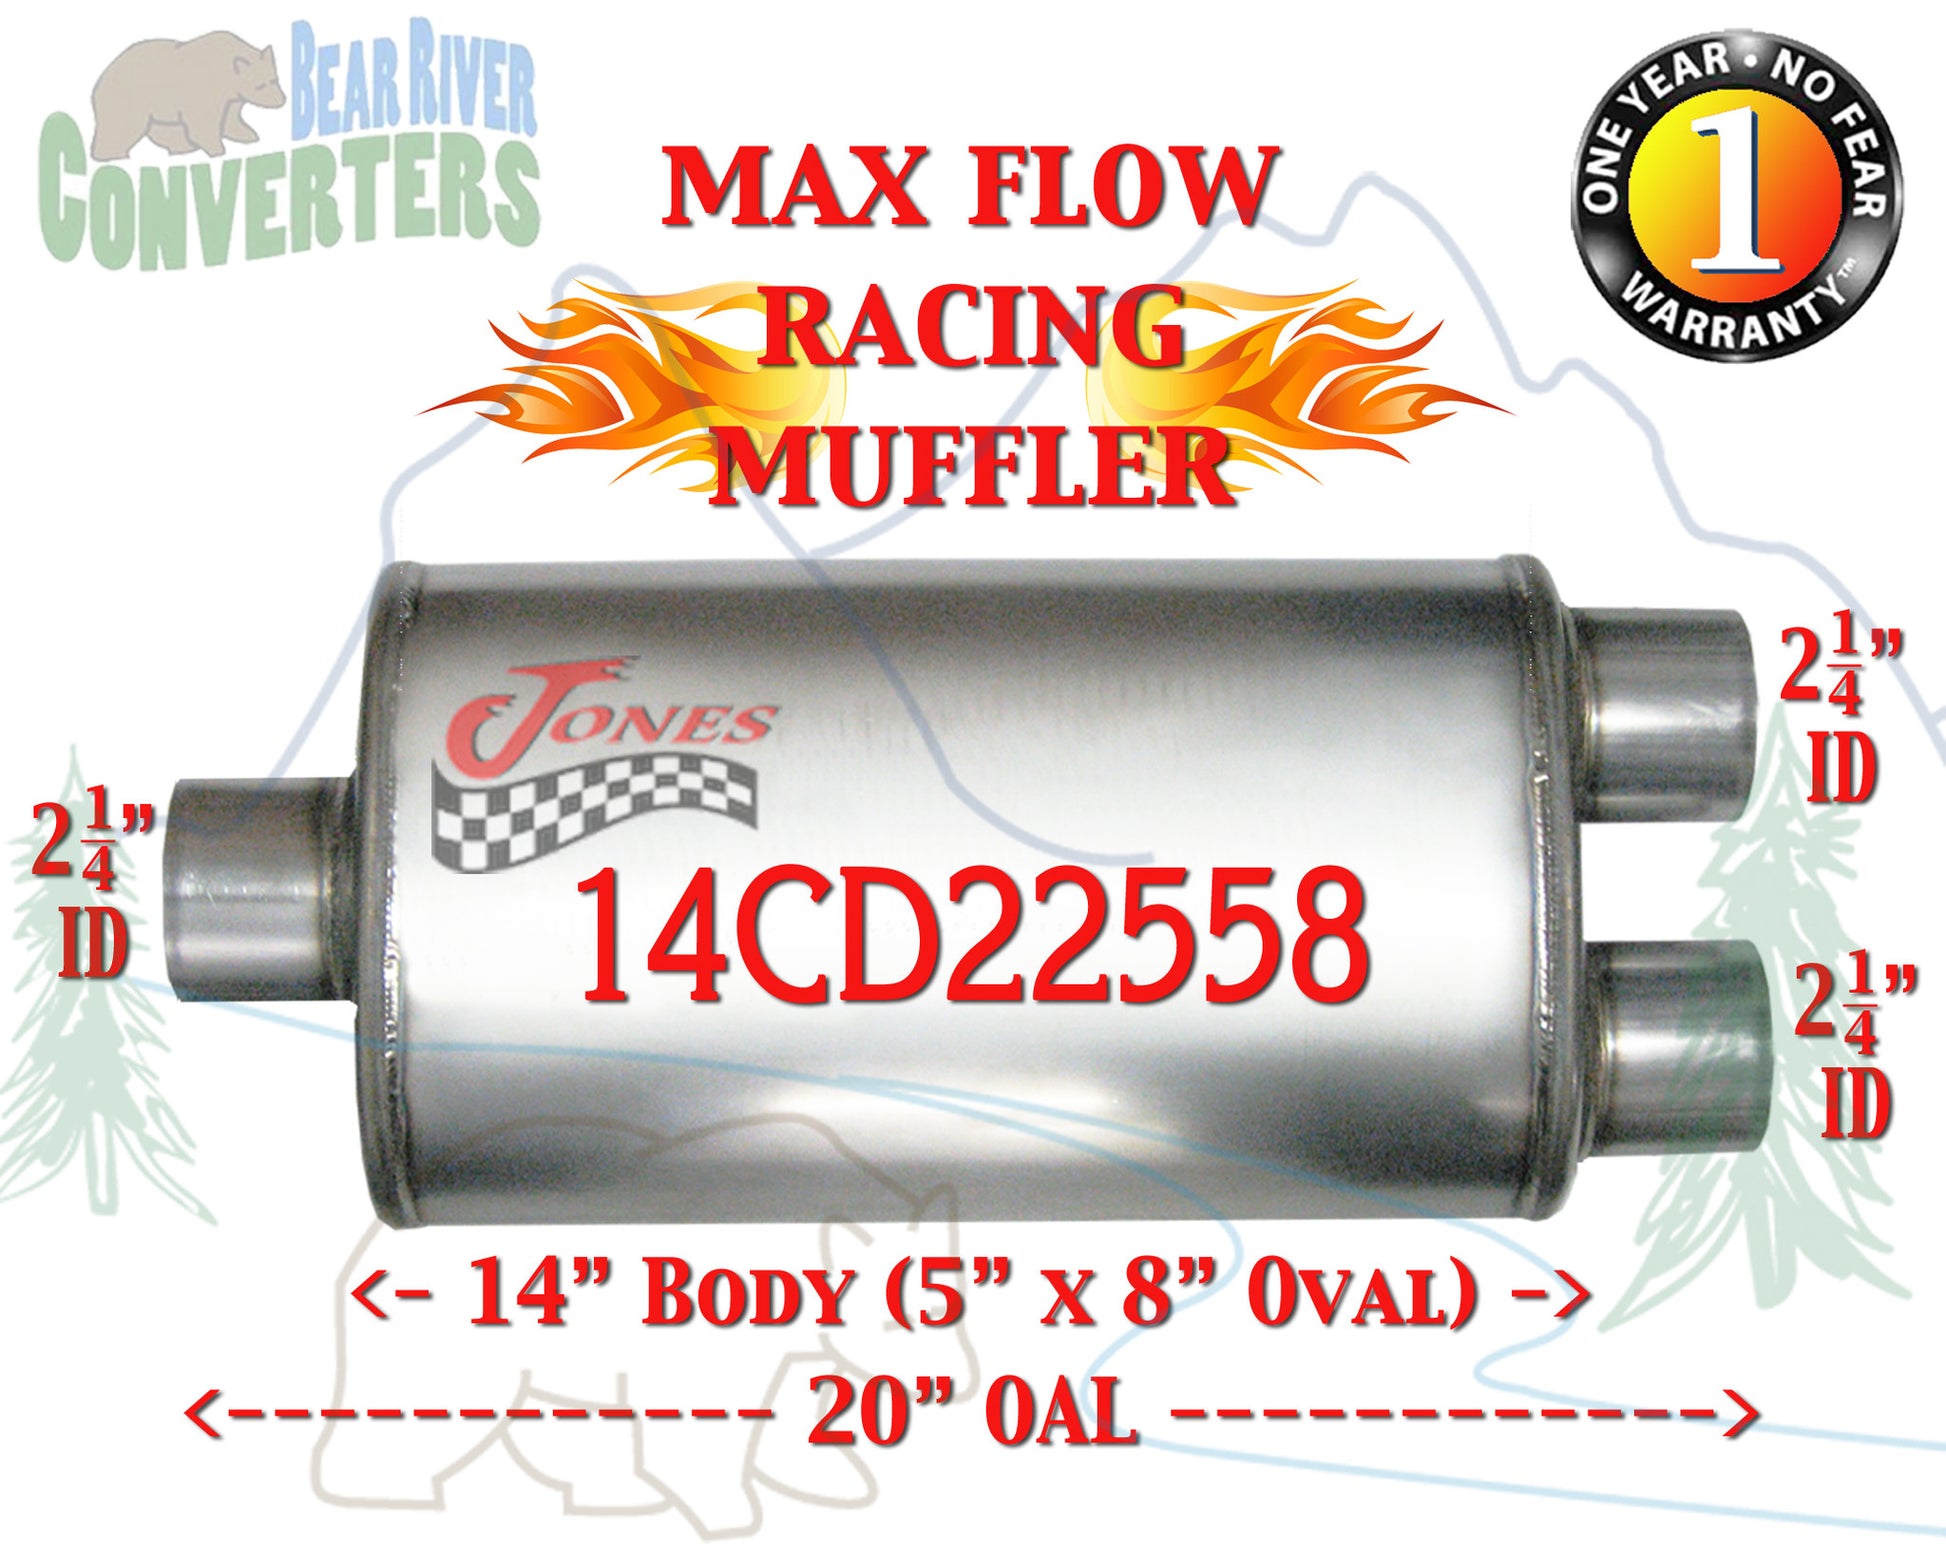 14CD22558 Jones MF2149 Max Flow Racing Muffler 14” Oval Body 2 1/4” 2.25” Pipe Center/Dual 20” OAL - Bear River Converters